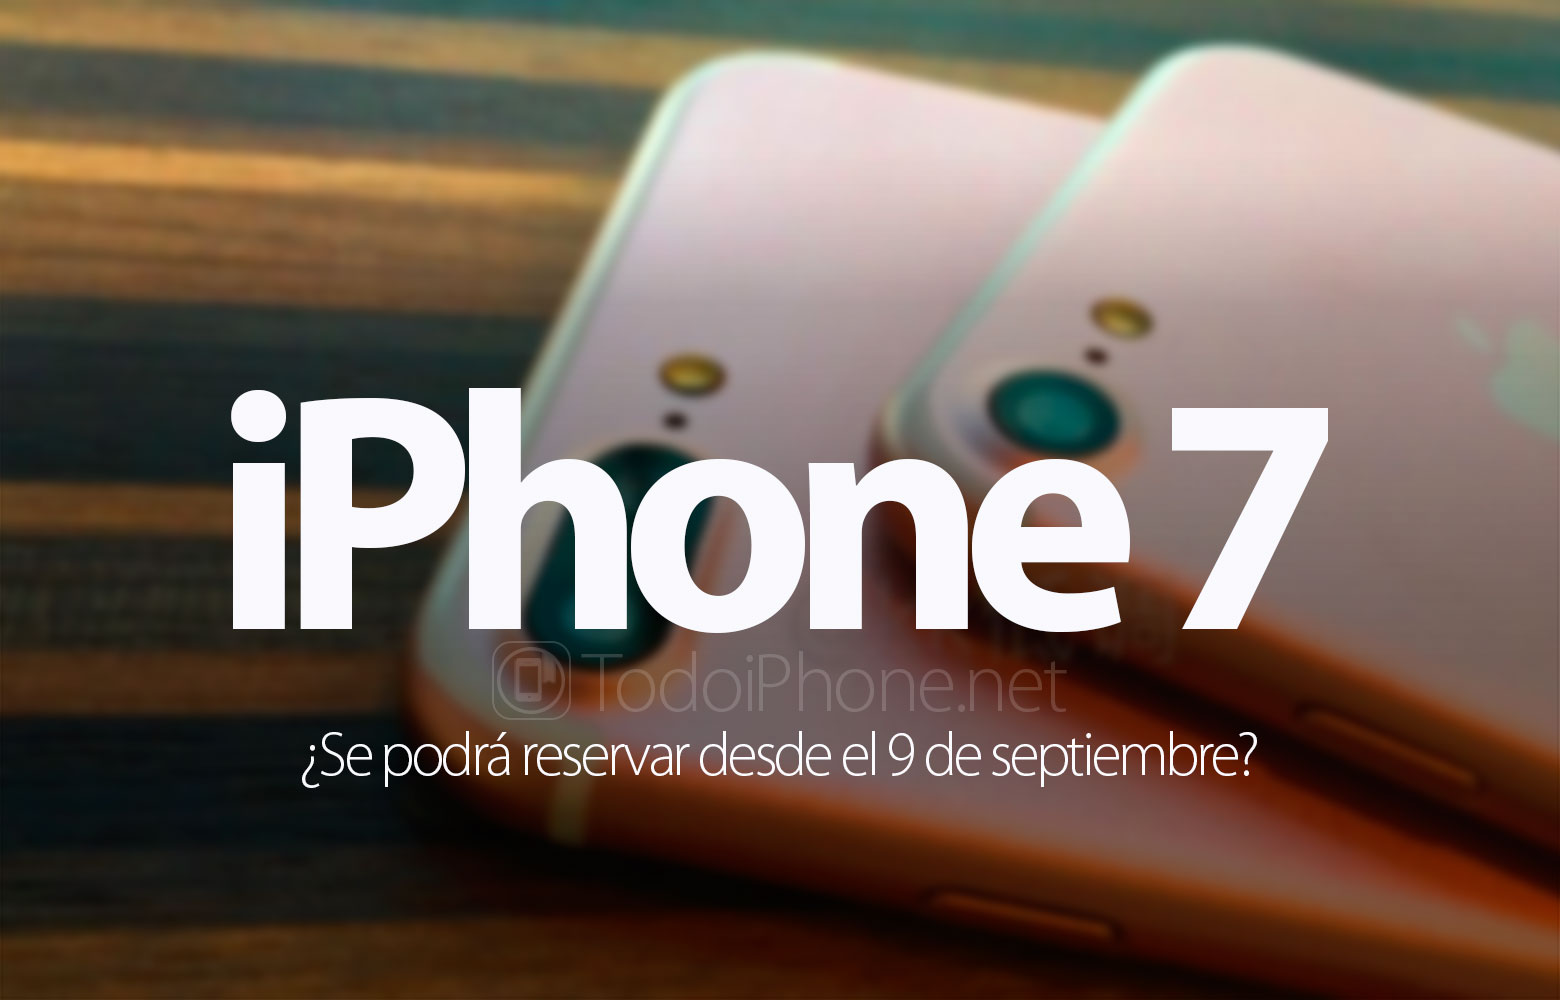 iphone-7-podra-reservar-9-septiembre